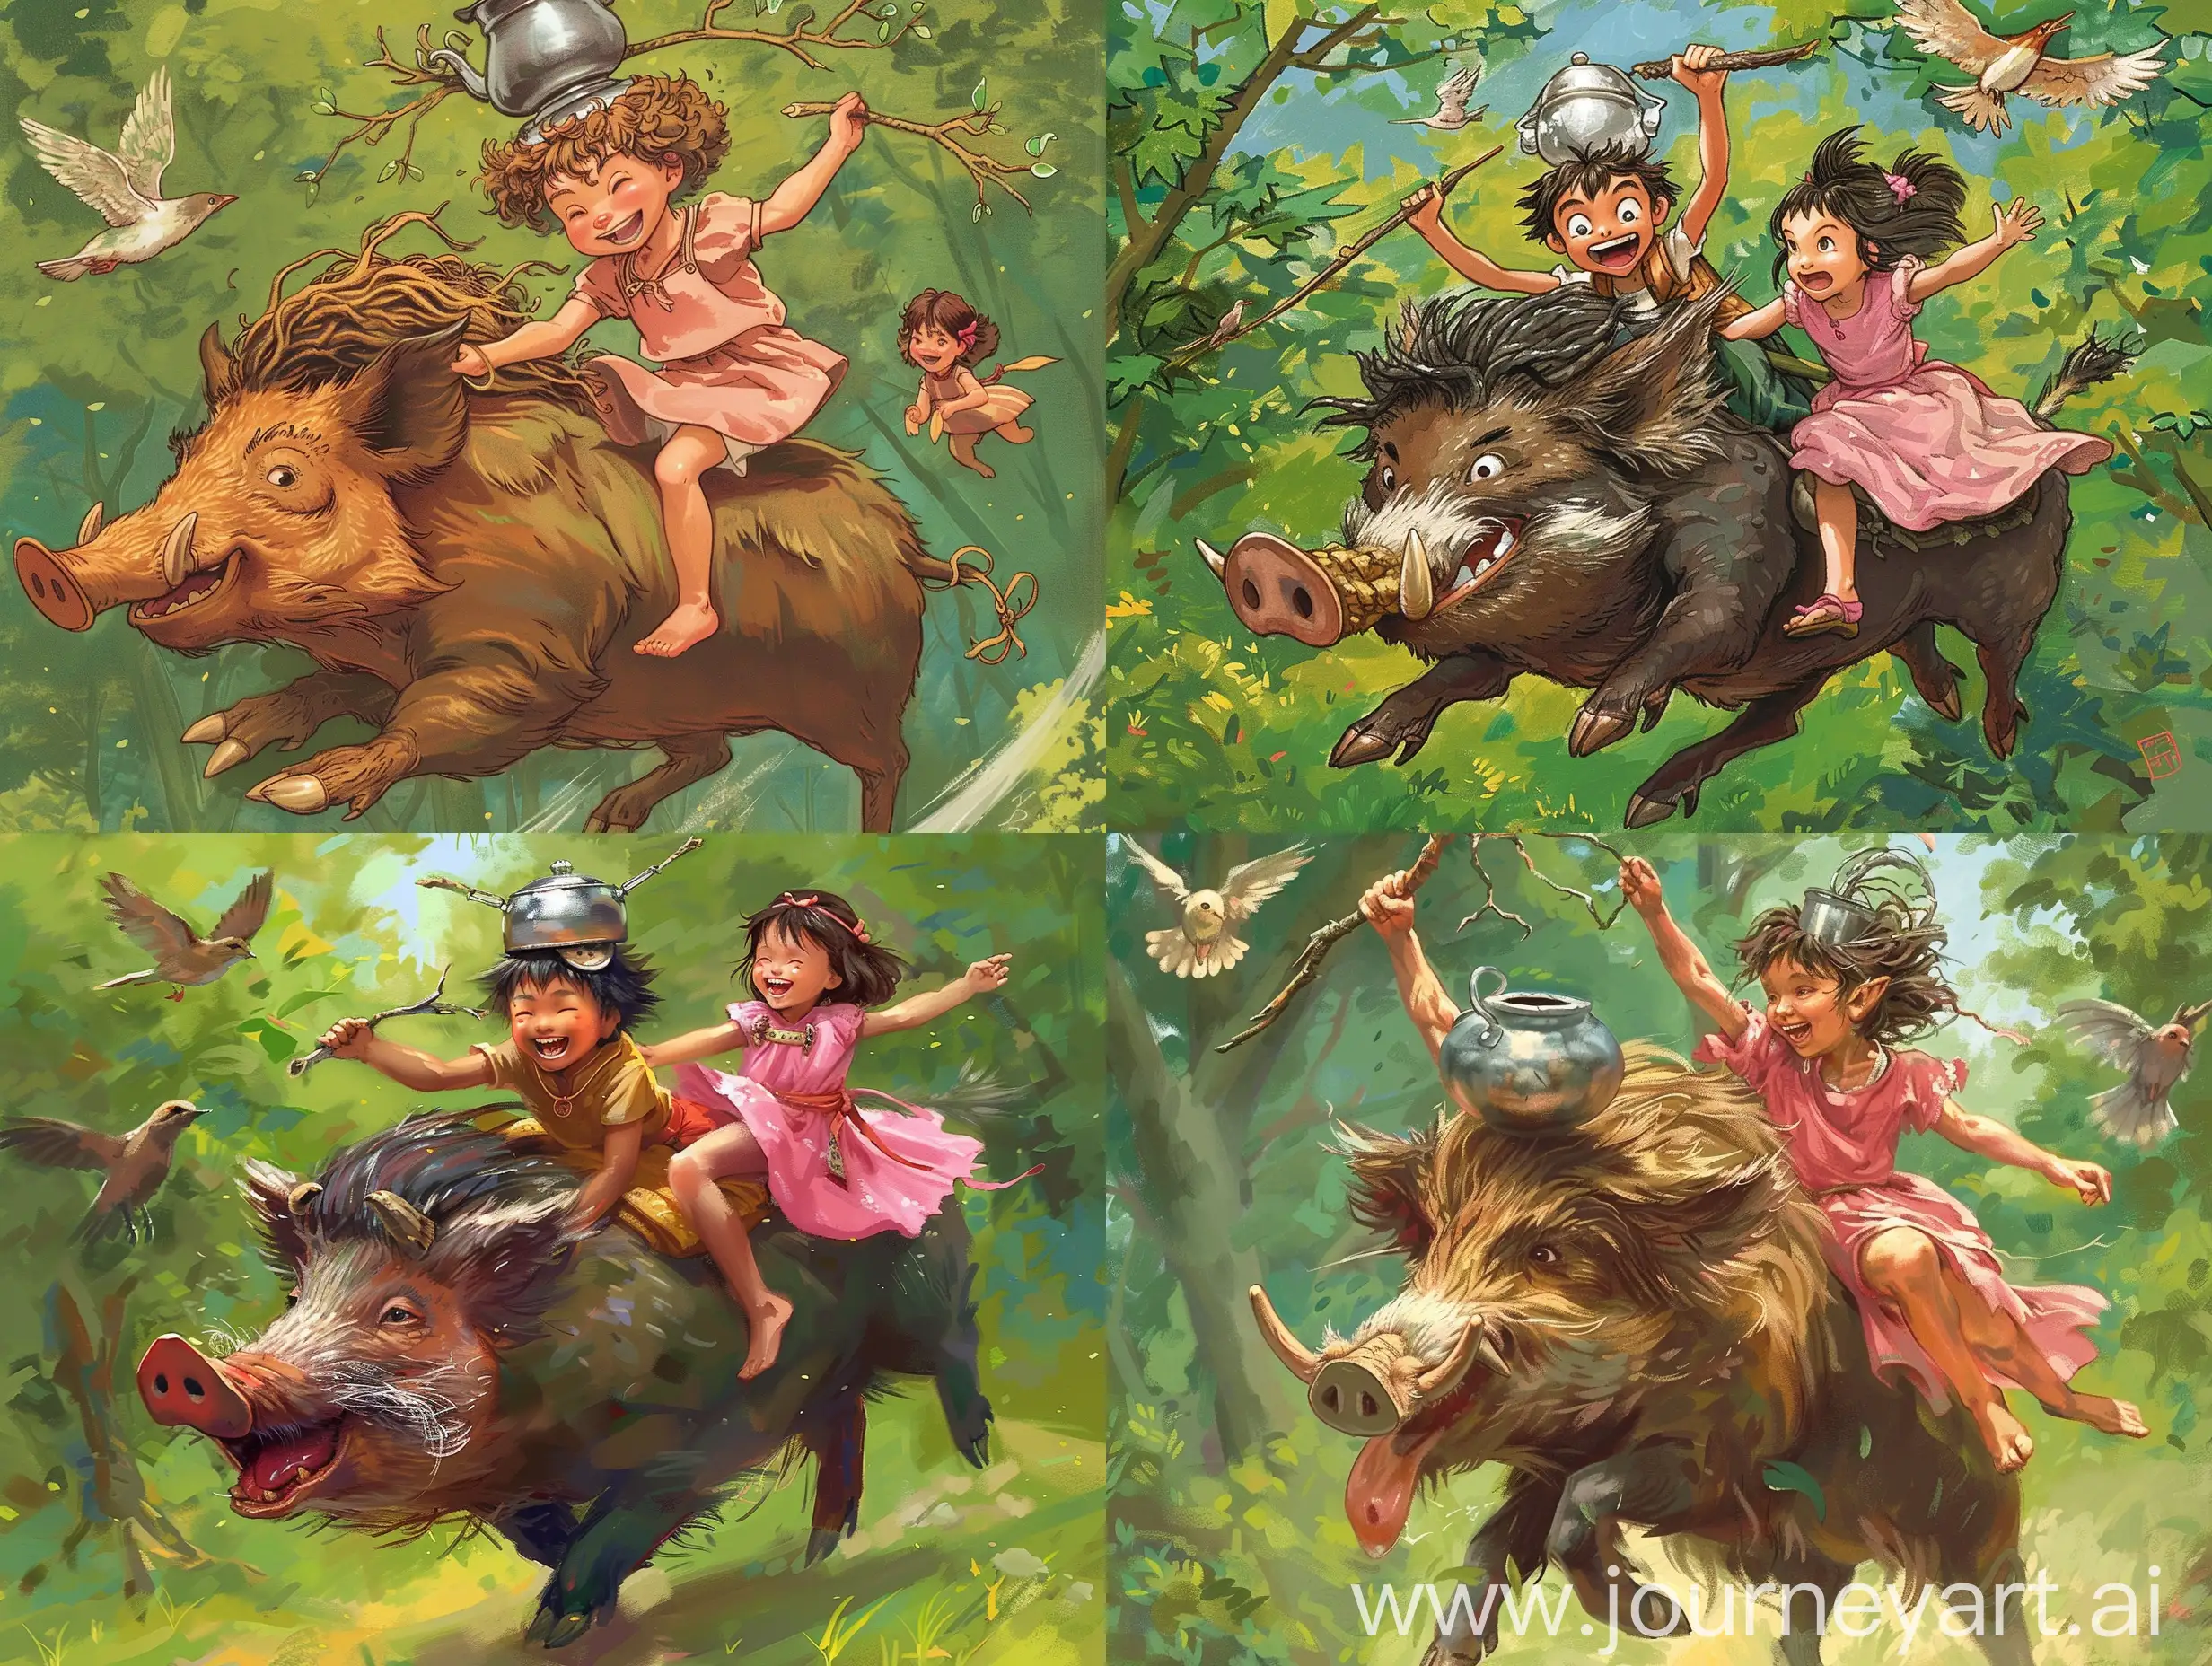 Joyful-Children-Riding-Wild-Boar-Through-Forest-Studio-Ghibli-Inspired-Illustration